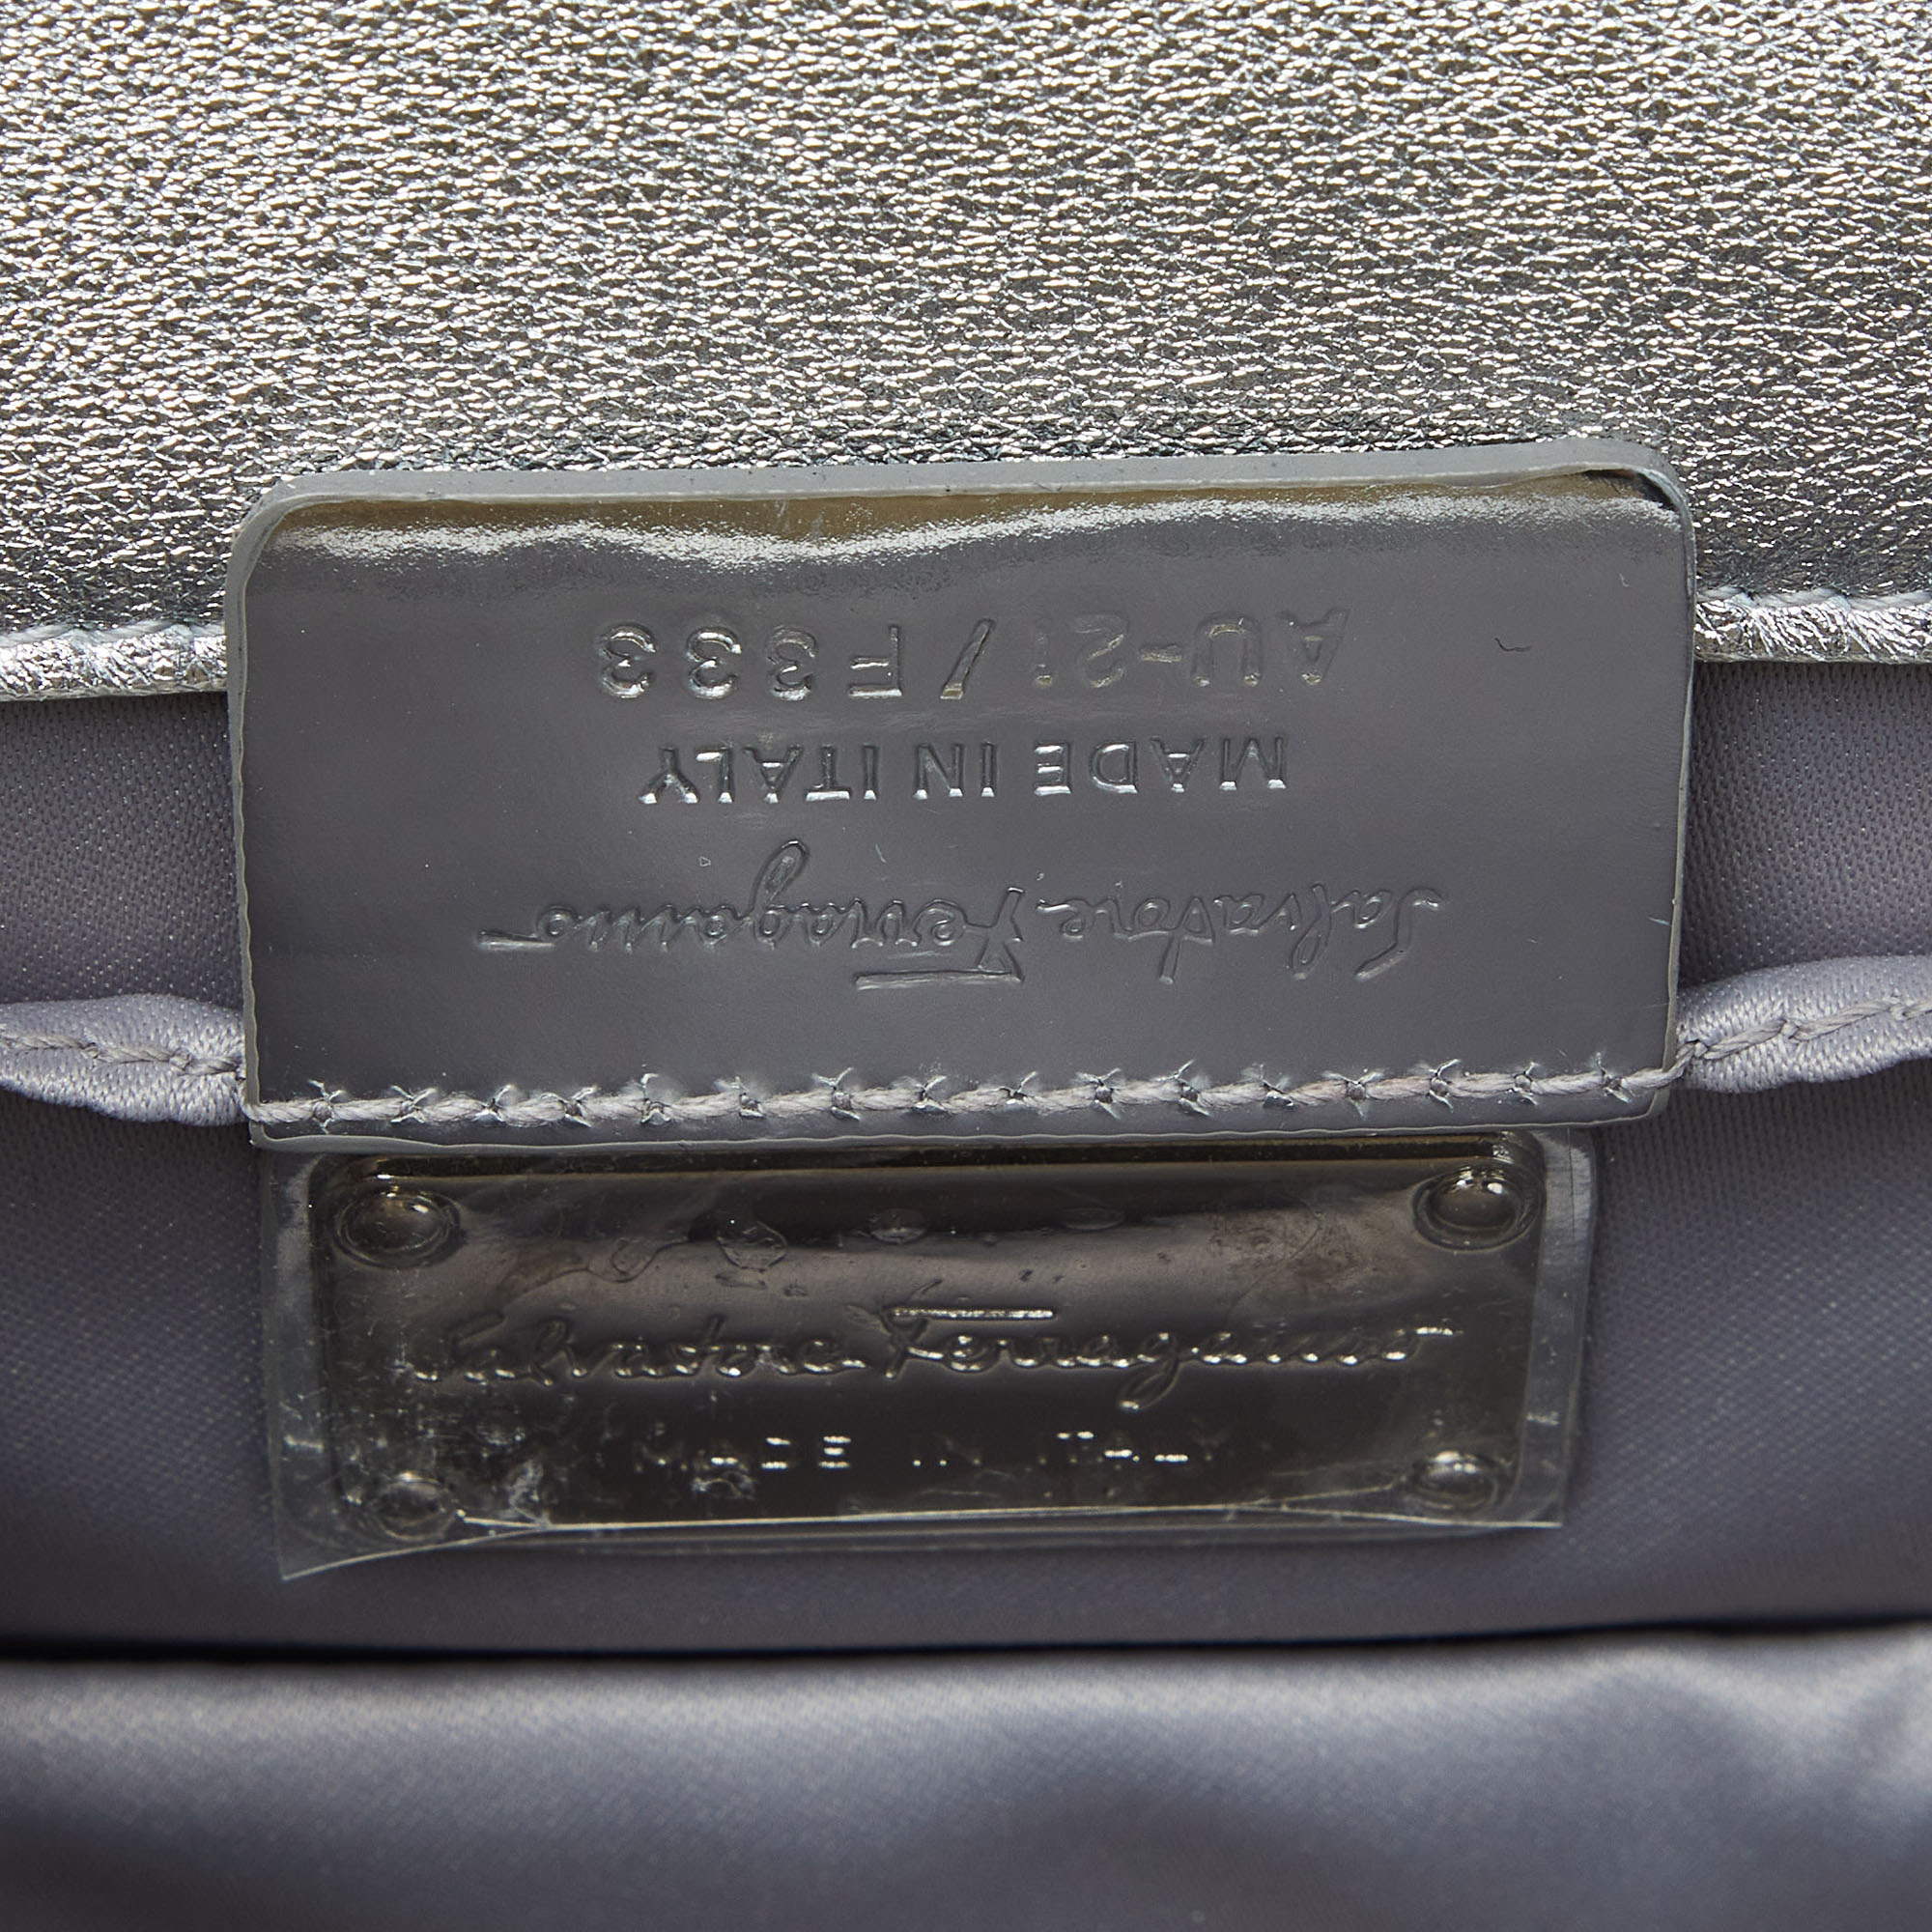 Salvatore Ferragamo Silver Glitter And Laminated Leather Top Handle Bag